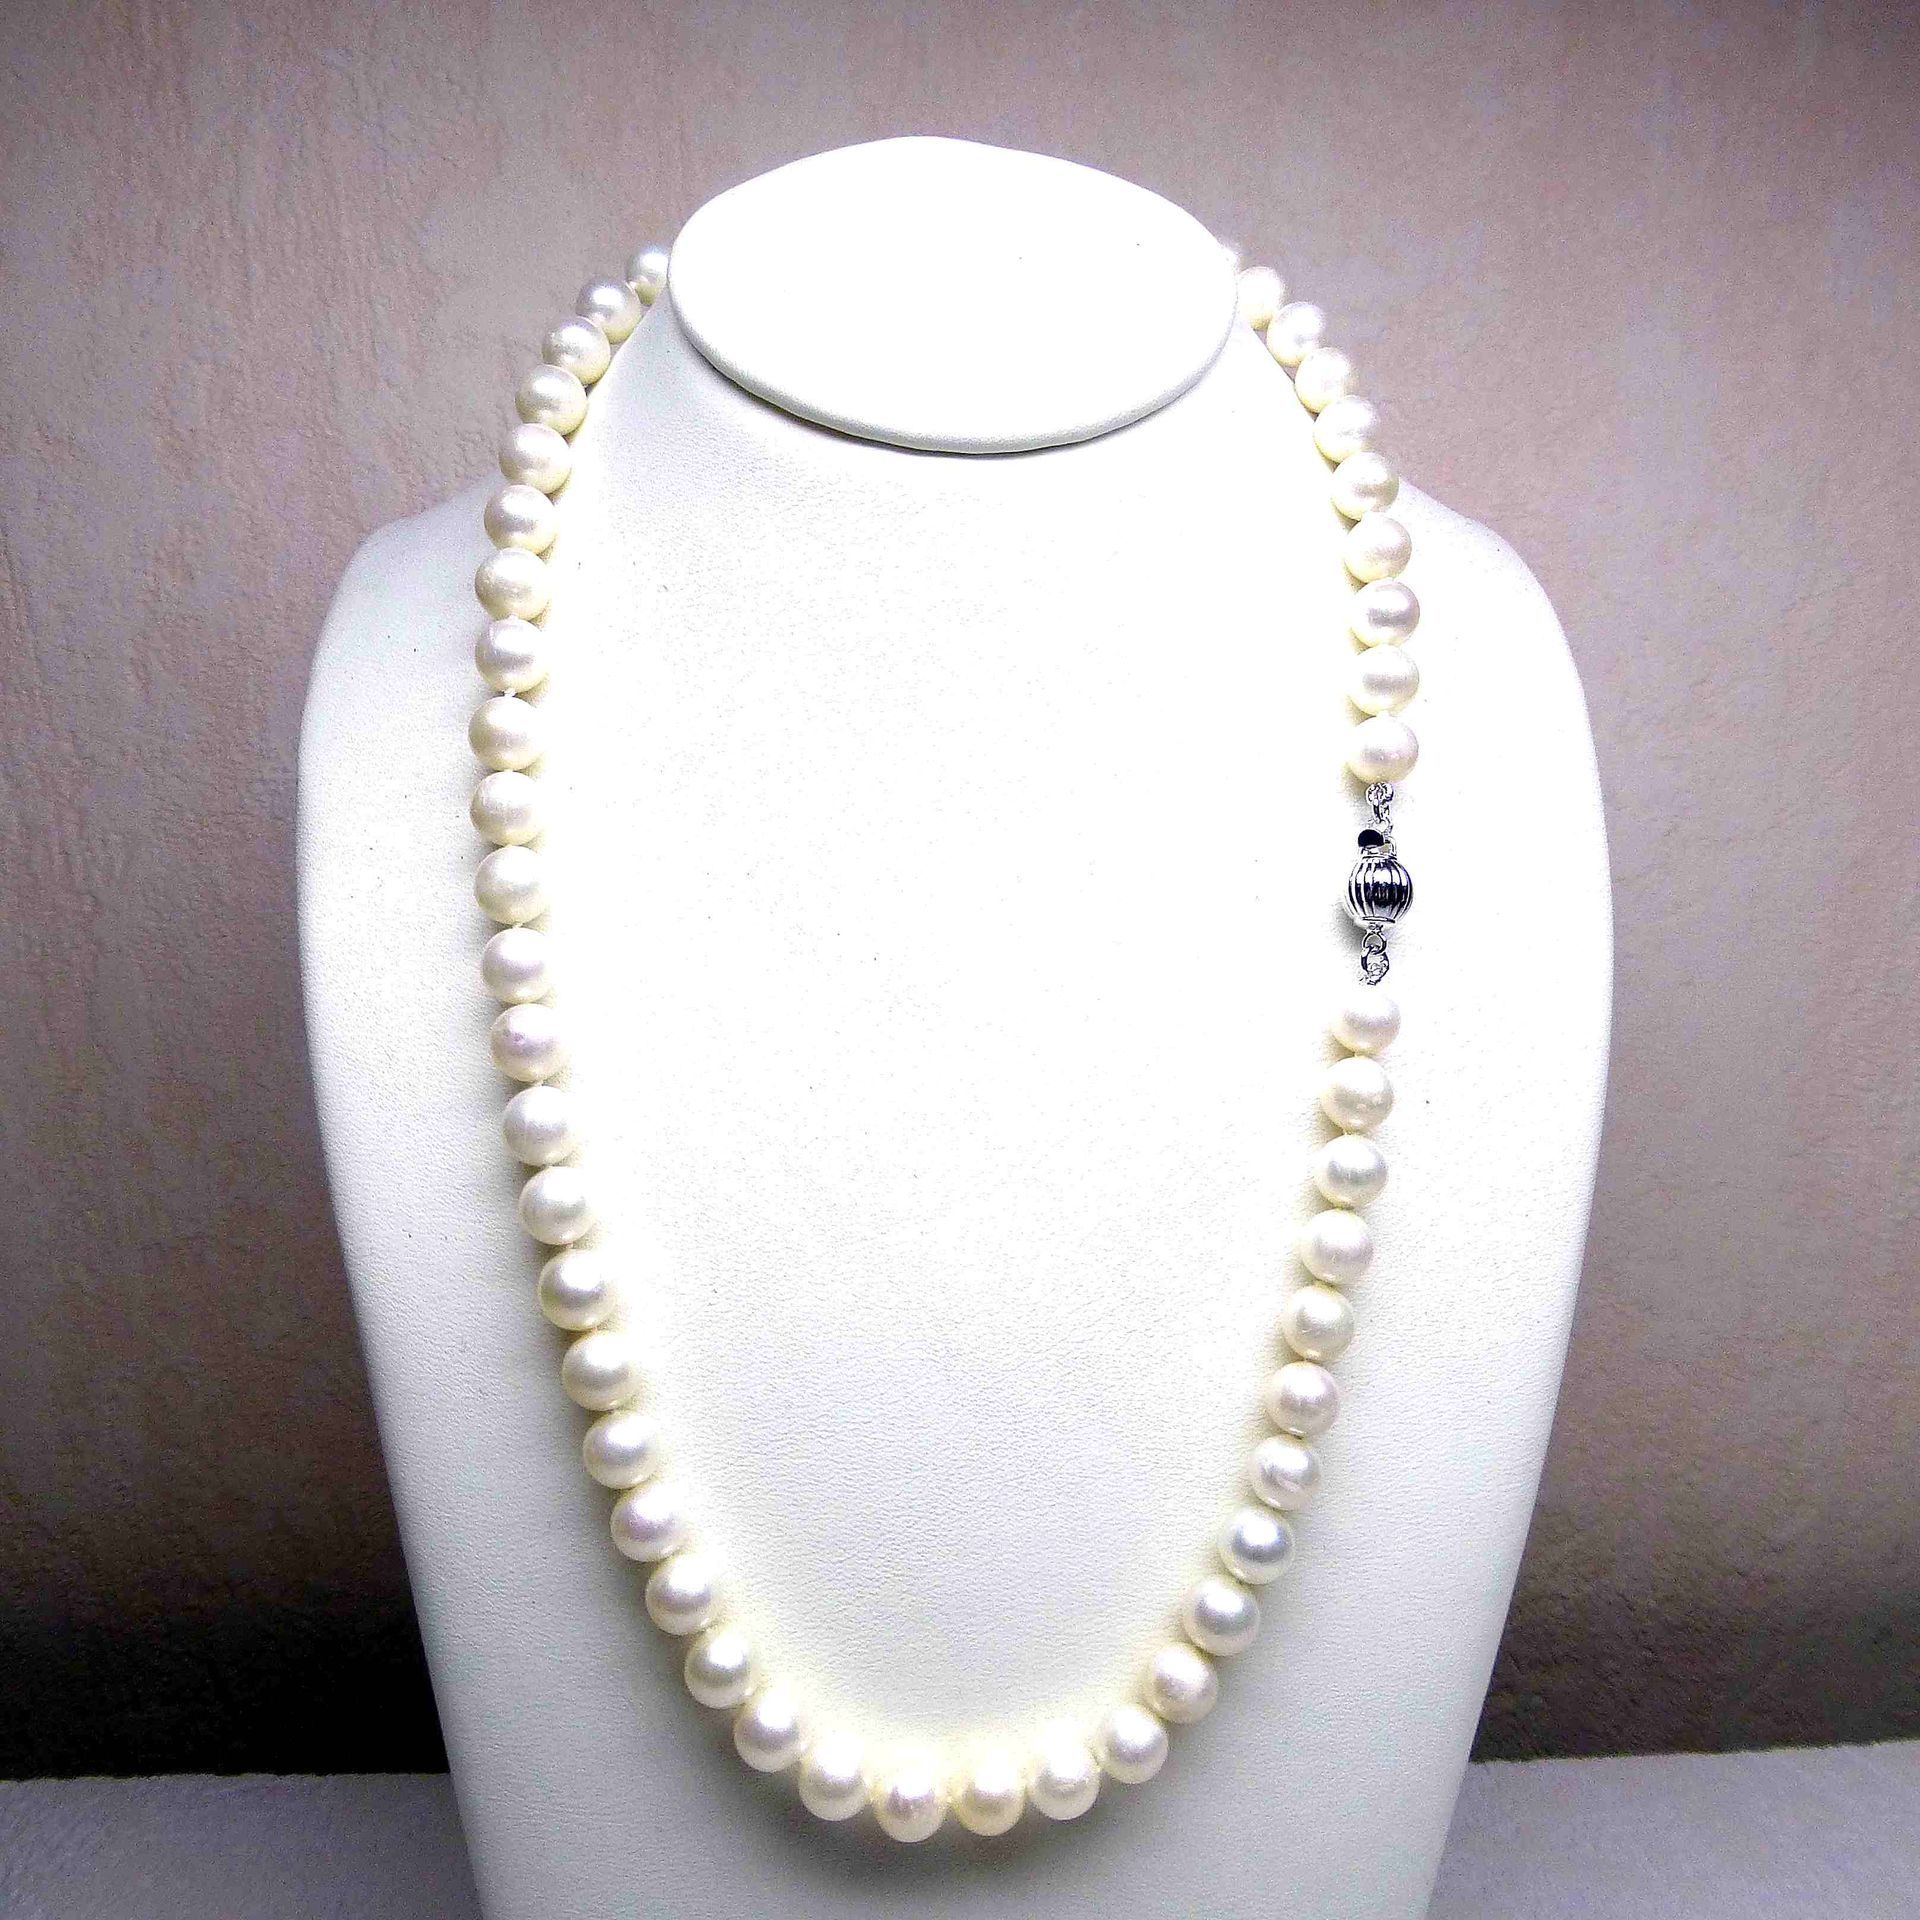 Null Un collar de perlas cultivadas natur+D11:G81elles diámetro 7 - 7,5 mm de un&hellip;